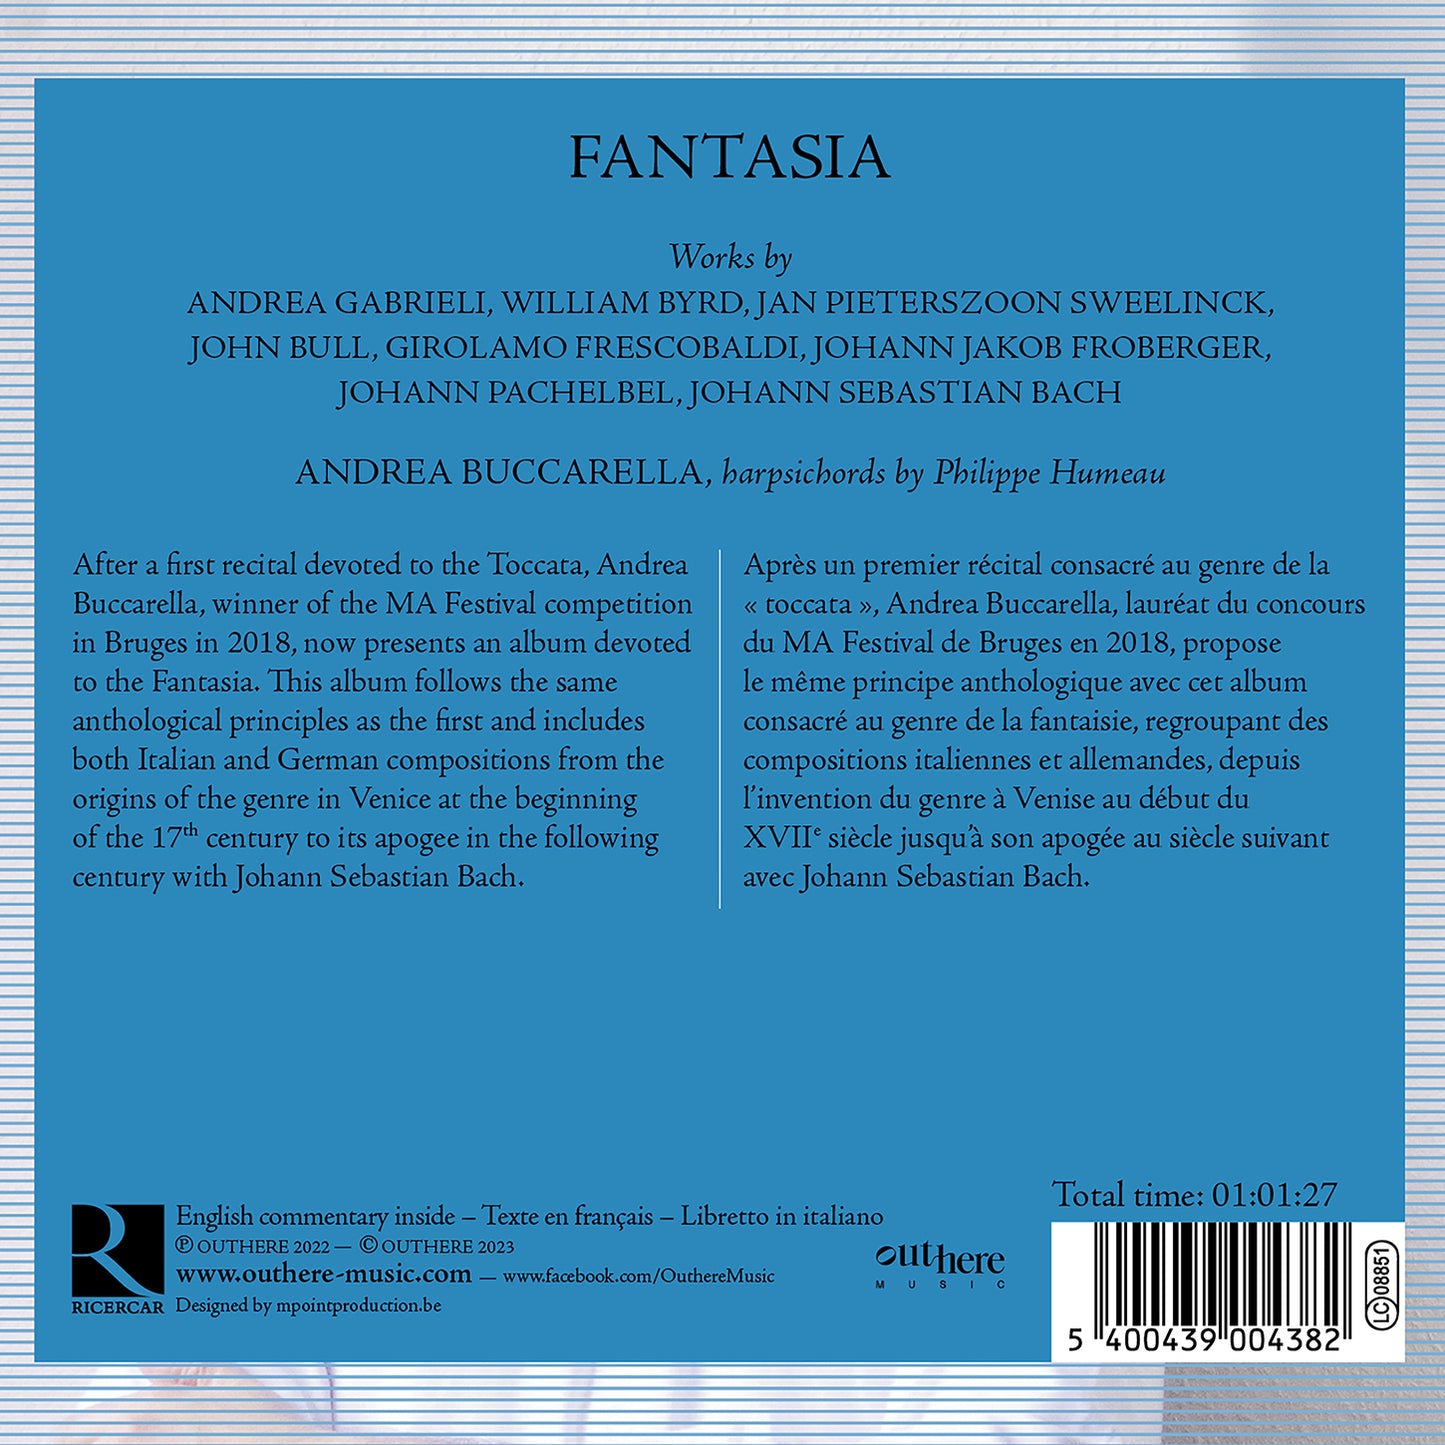 Fantasia from Andrea Gabrieli to Johann Sebastian Bach